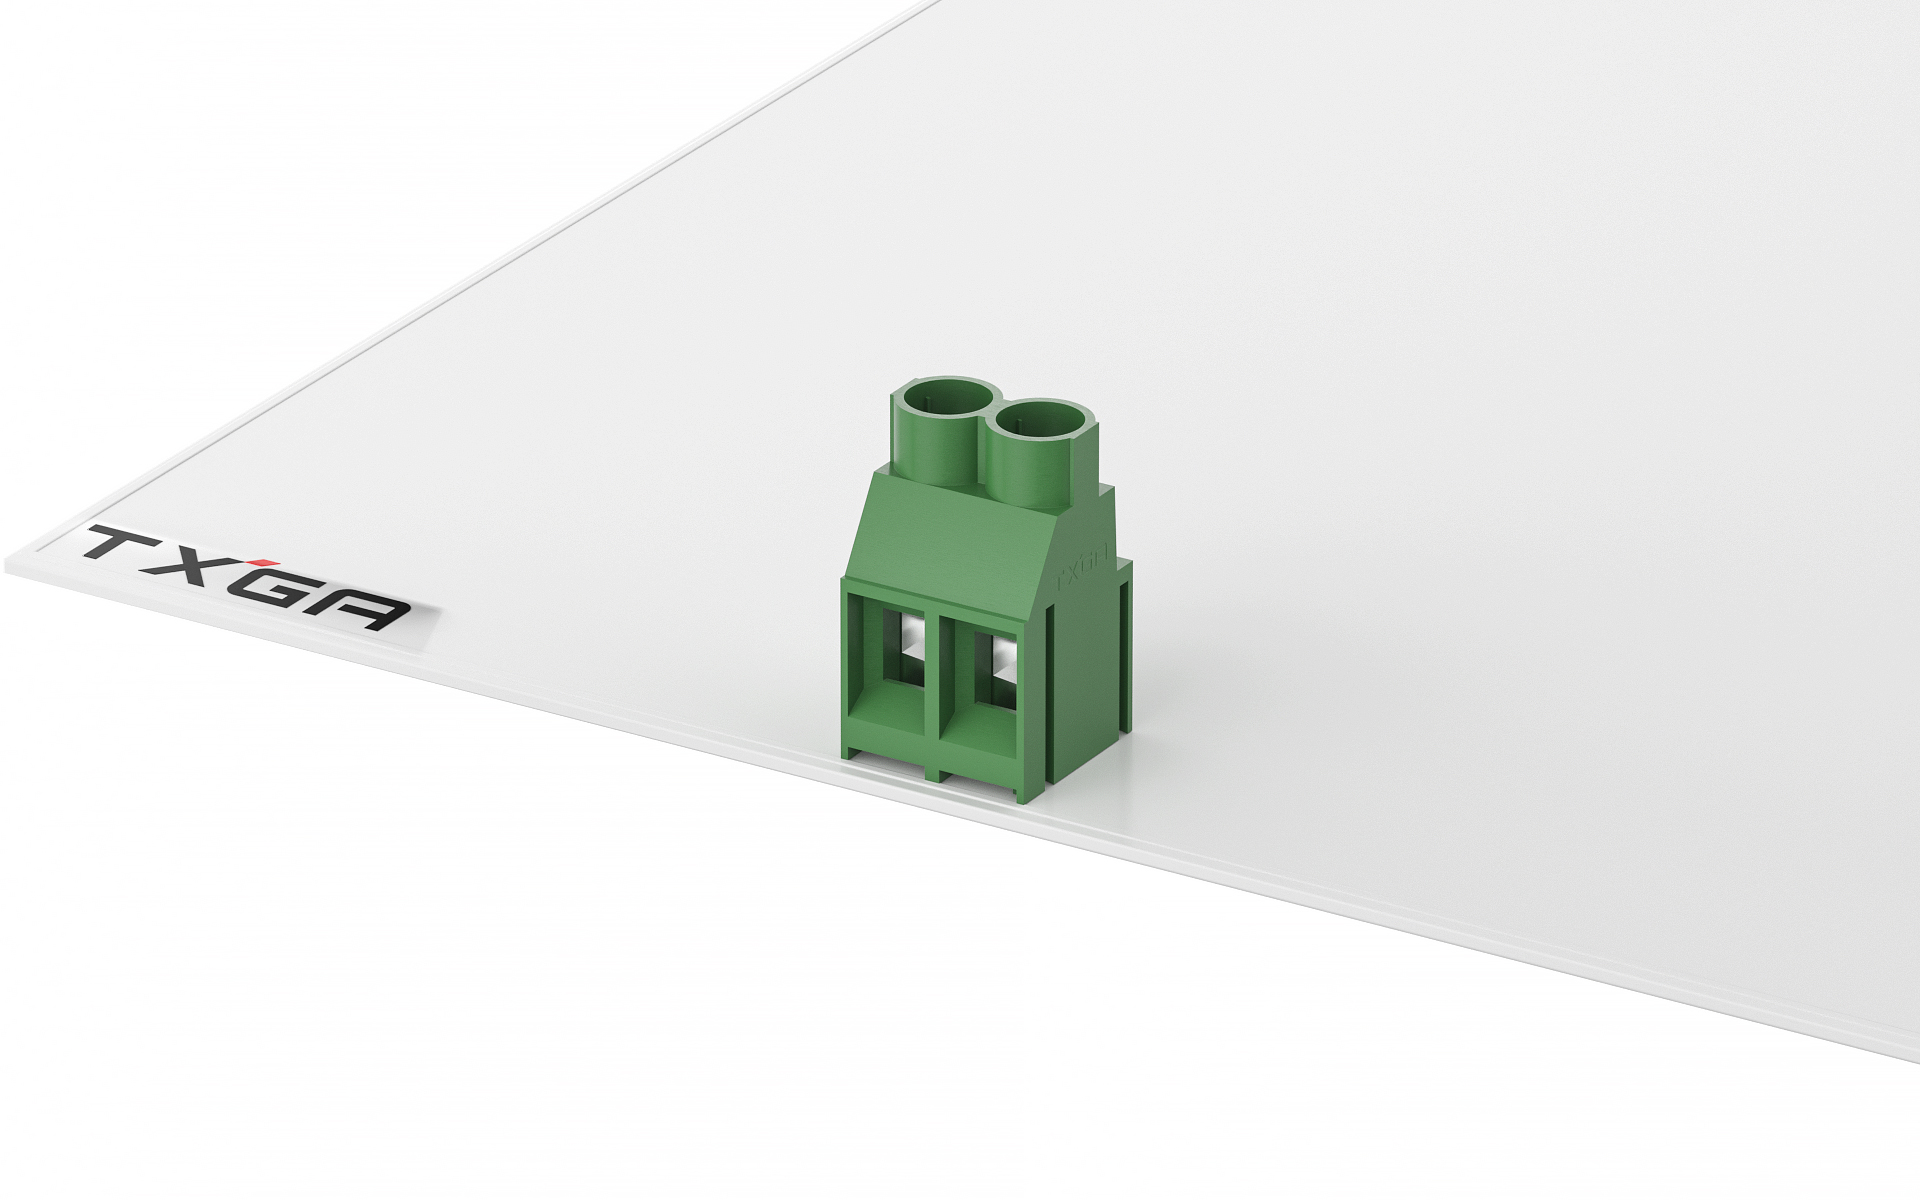 Terminal Block,6.35mm,Plug,2Circuits,Right angle(90°),Through hole,Green